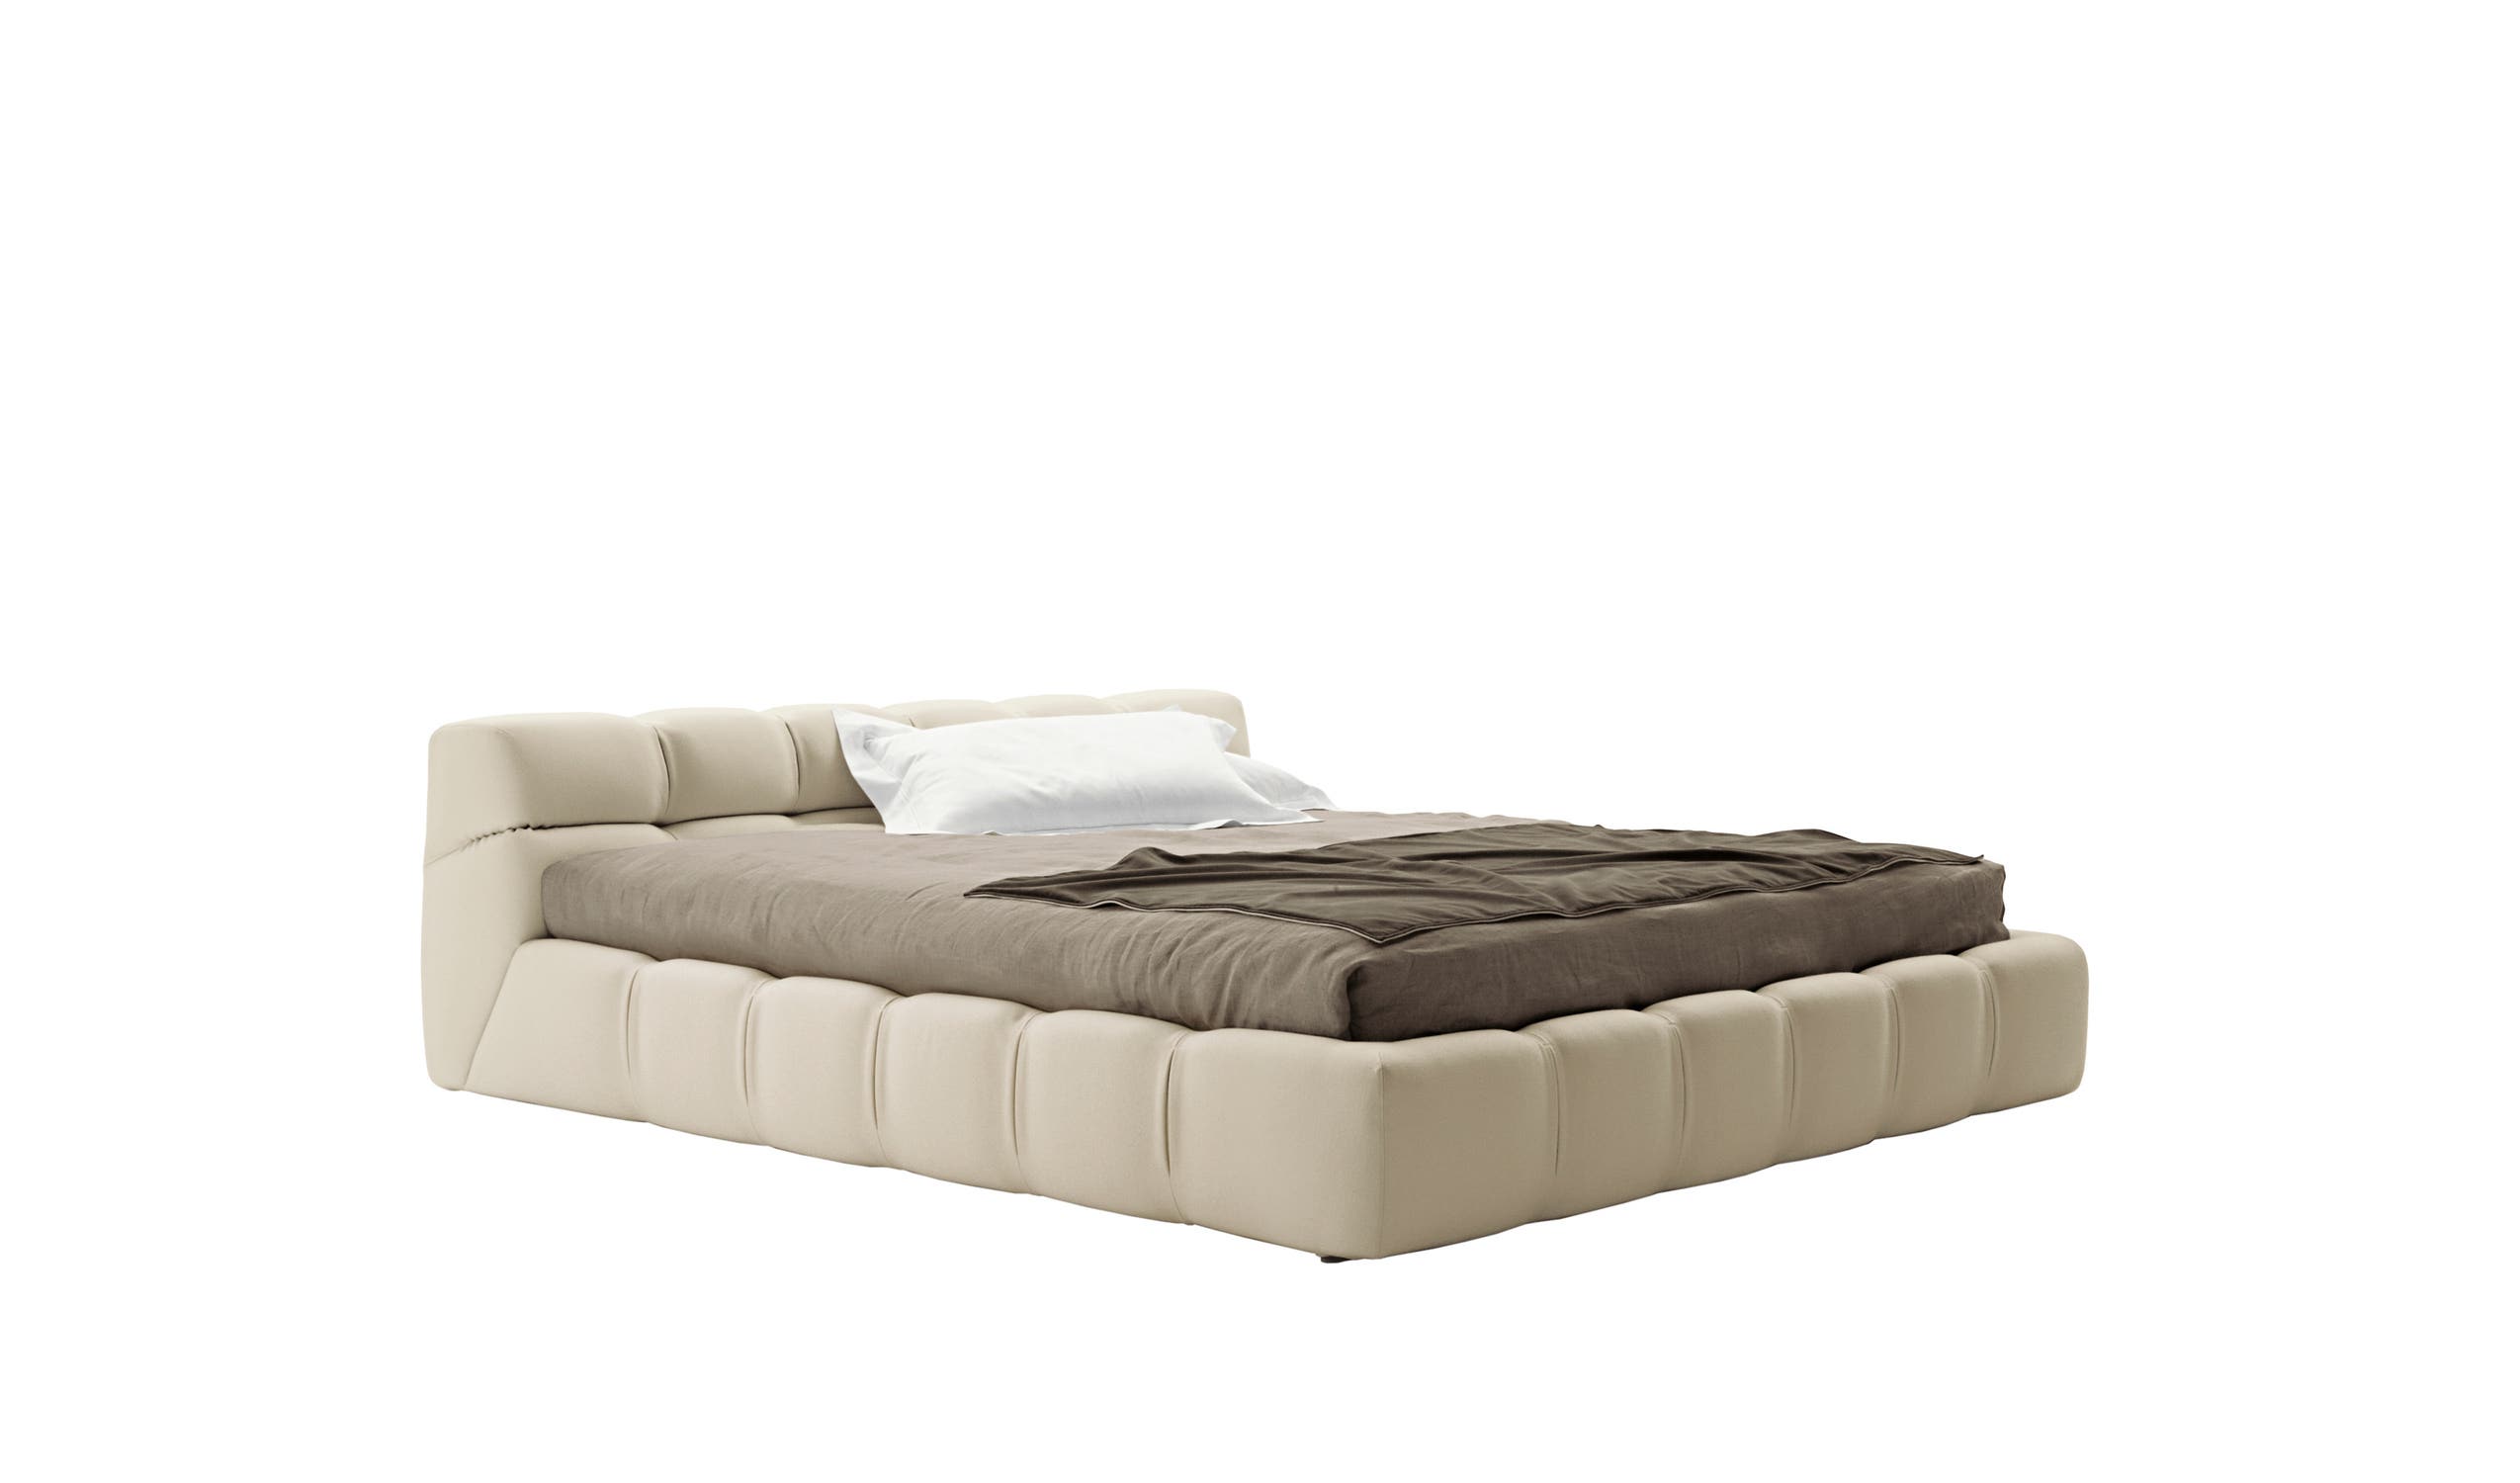 Designer Italian modern beds - Tufty-Bed Beds